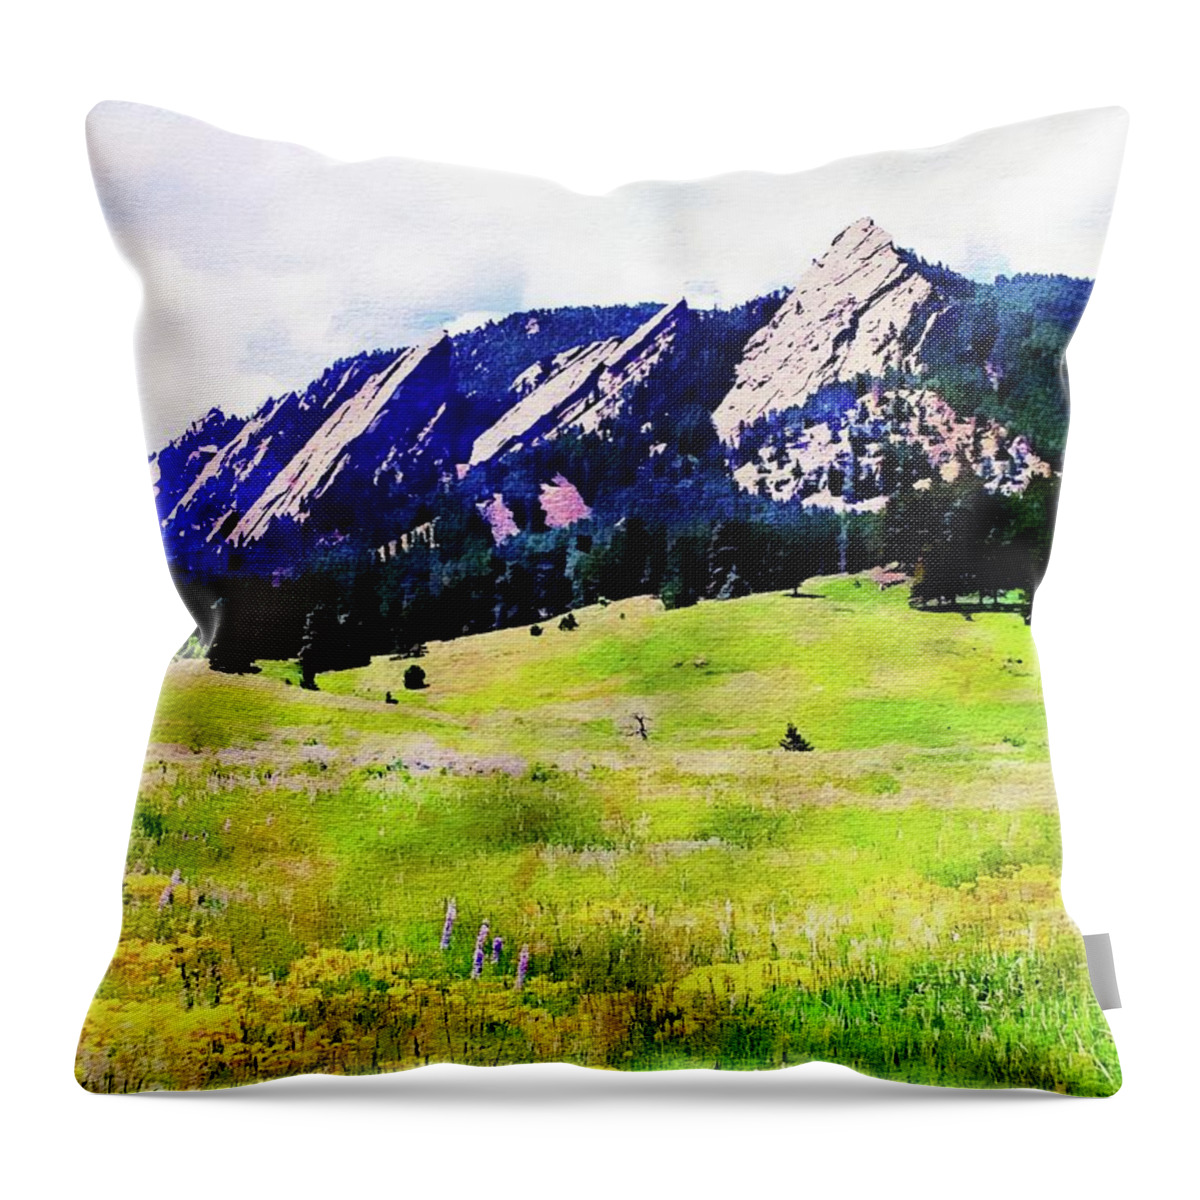 United States Throw Pillow featuring the digital art Flatirons - Boulder, Colorado by Joseph Hendrix